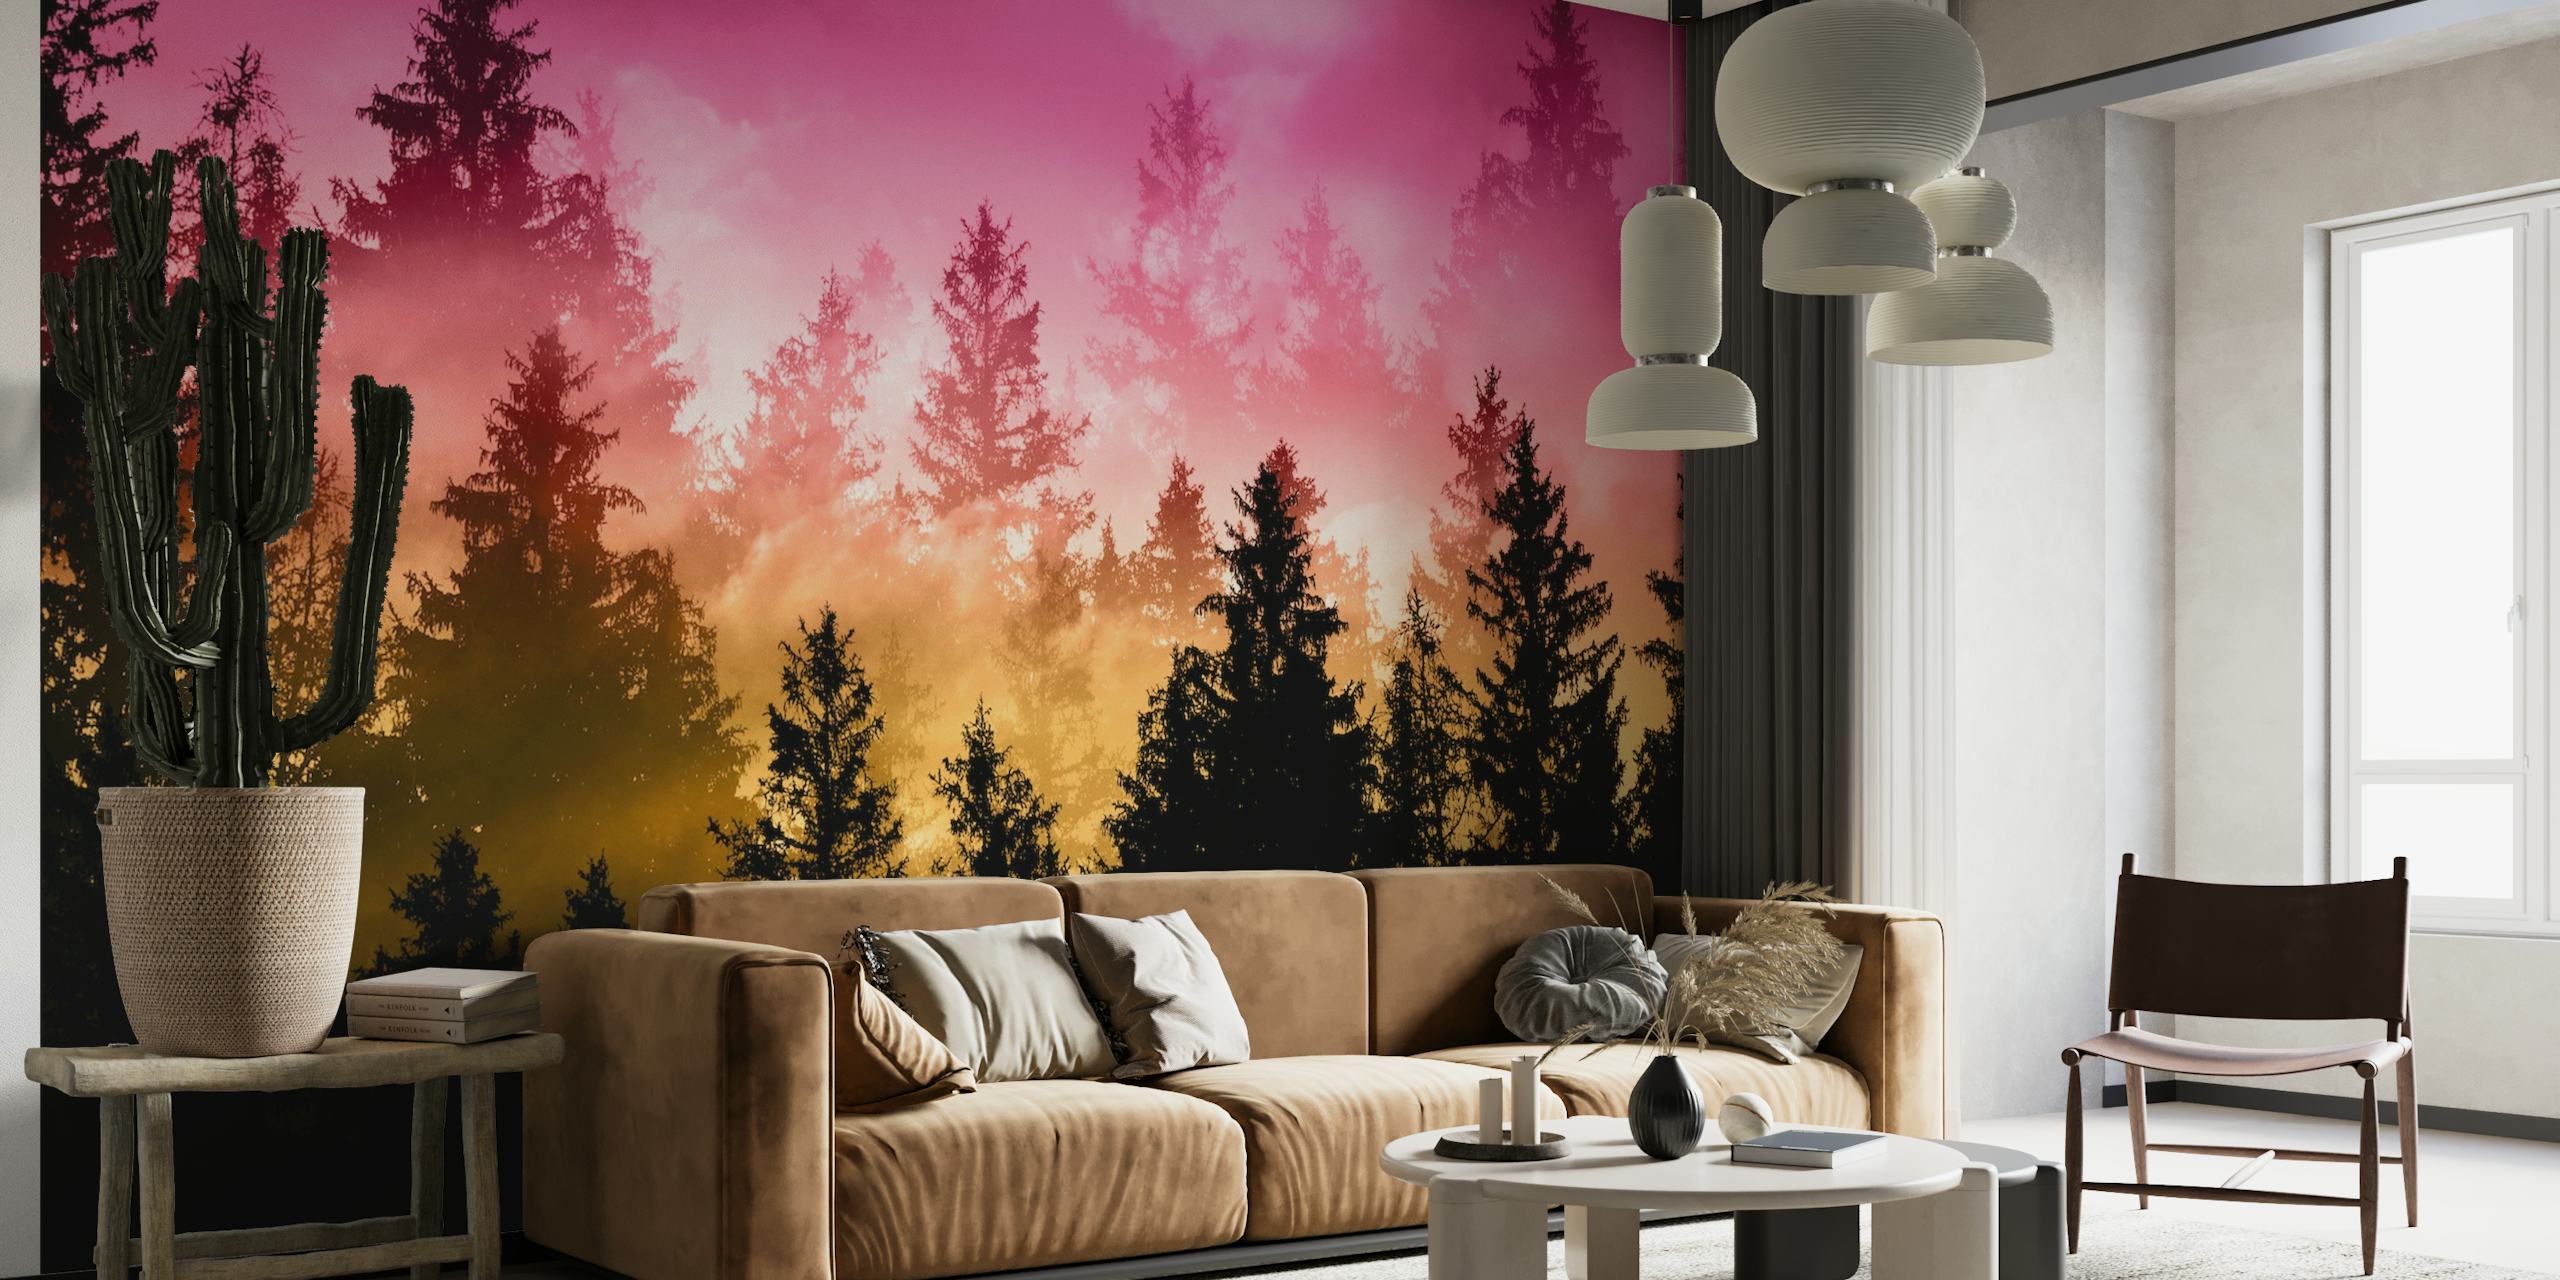 Sunset Forest Dream 1 papel pintado